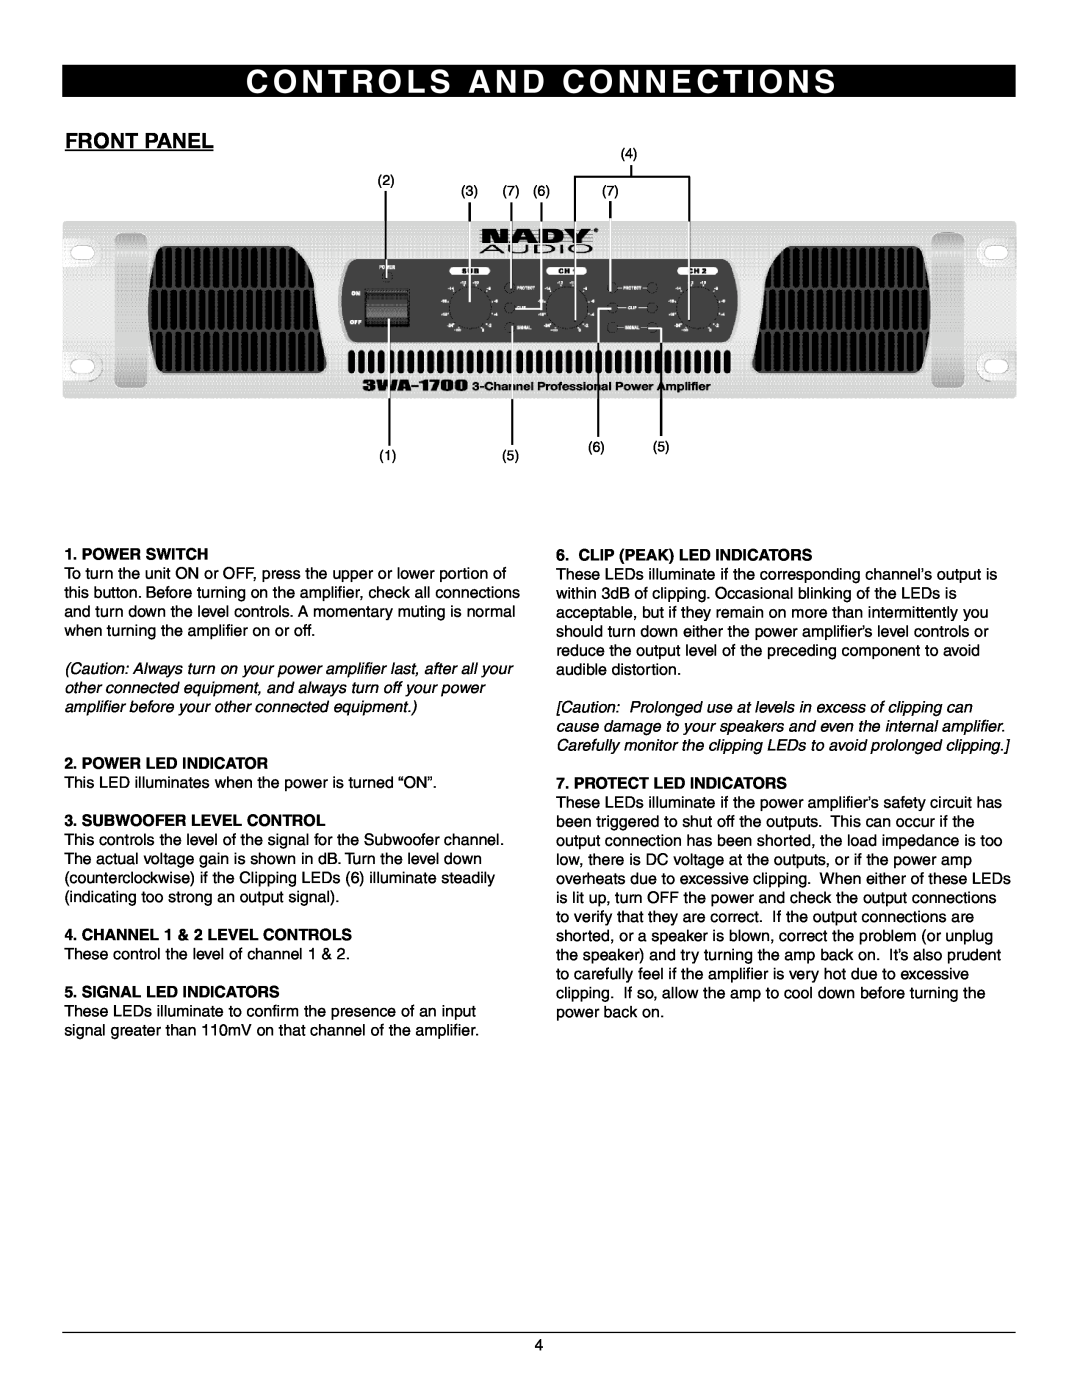 Nady Systems 3WA1700 C O N T R O L S A N D C O N N E C T I O N S, Front Panel, Power Switch, Power Led Indicator 